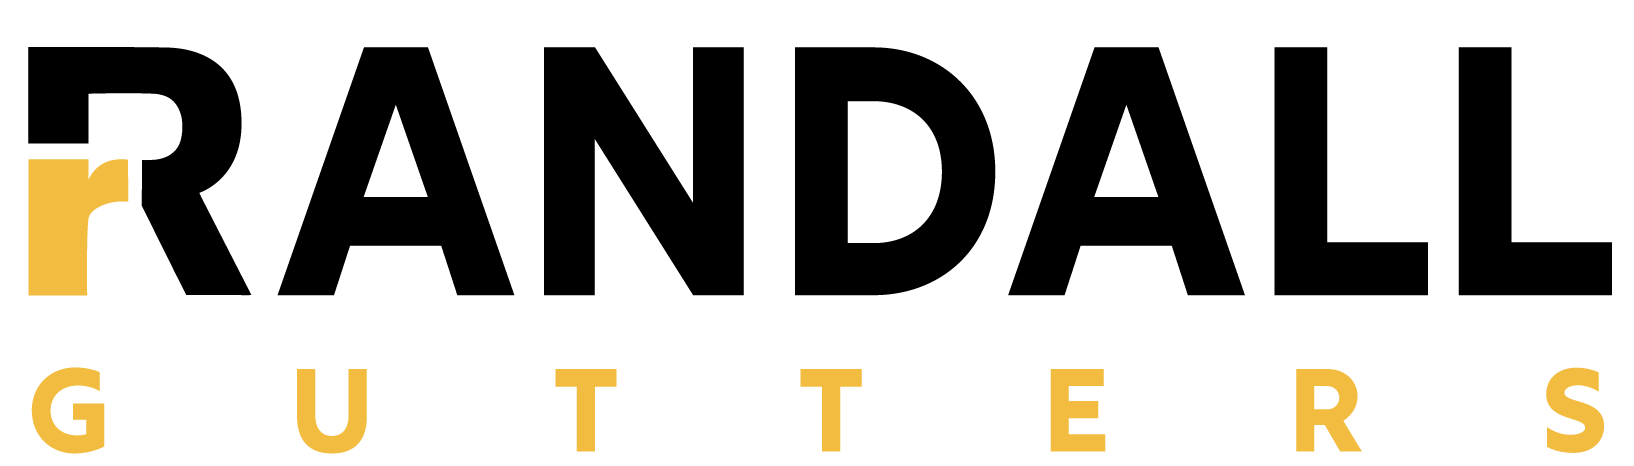 Randall Gutters logo